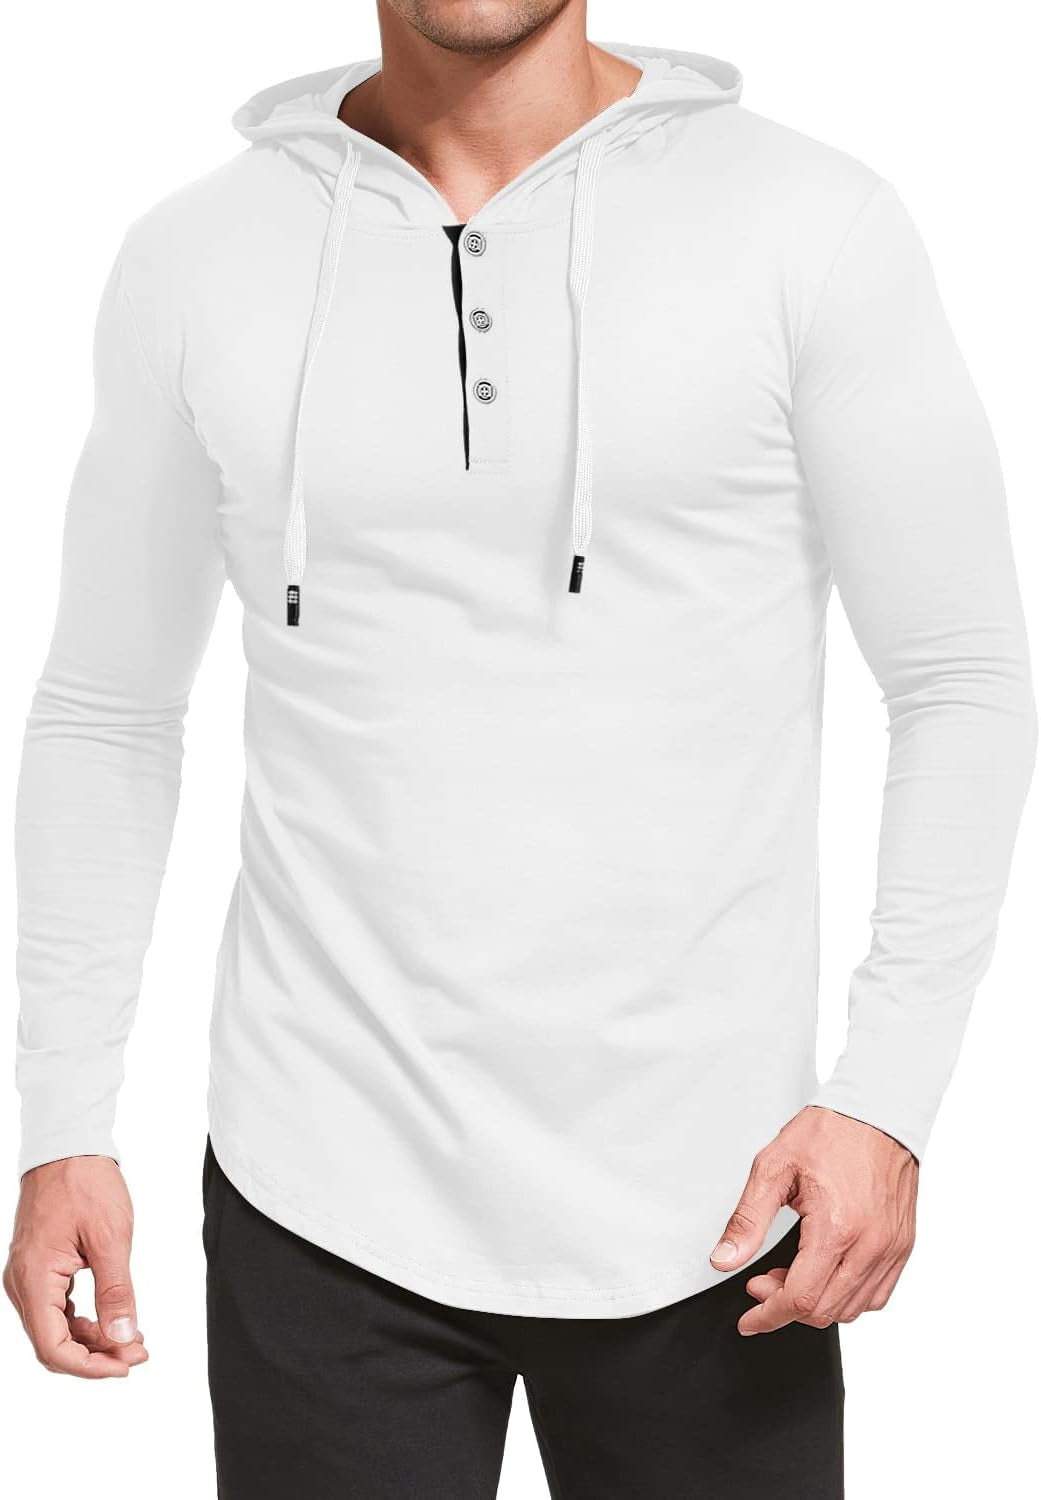 Men'S S-5X Short&Long Sleeve Athletic Casual plus Size Hoodies Sport Sweatshirt Hooded T-Shirts